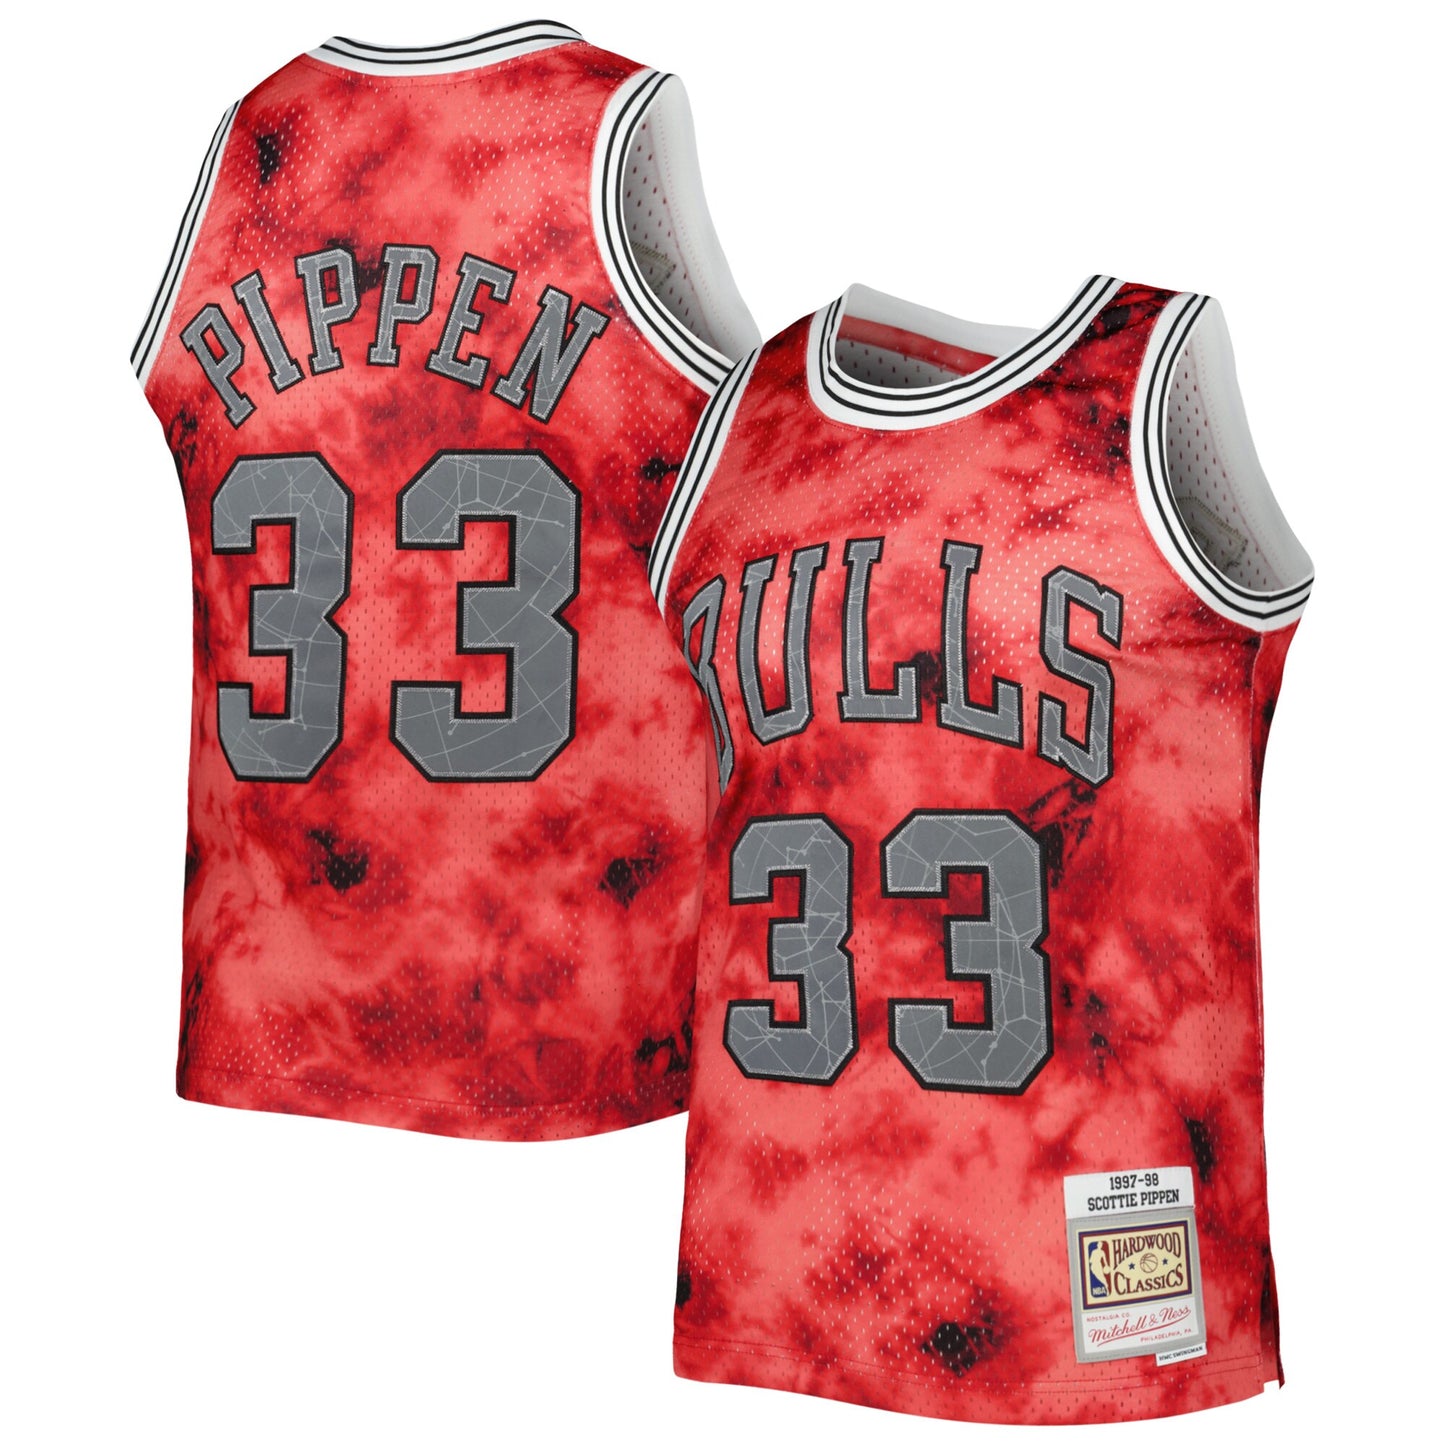 Scottie Pippen Chicago Bulls Mitchell & Ness 1997/98 Galaxy Swingman Jersey - Red